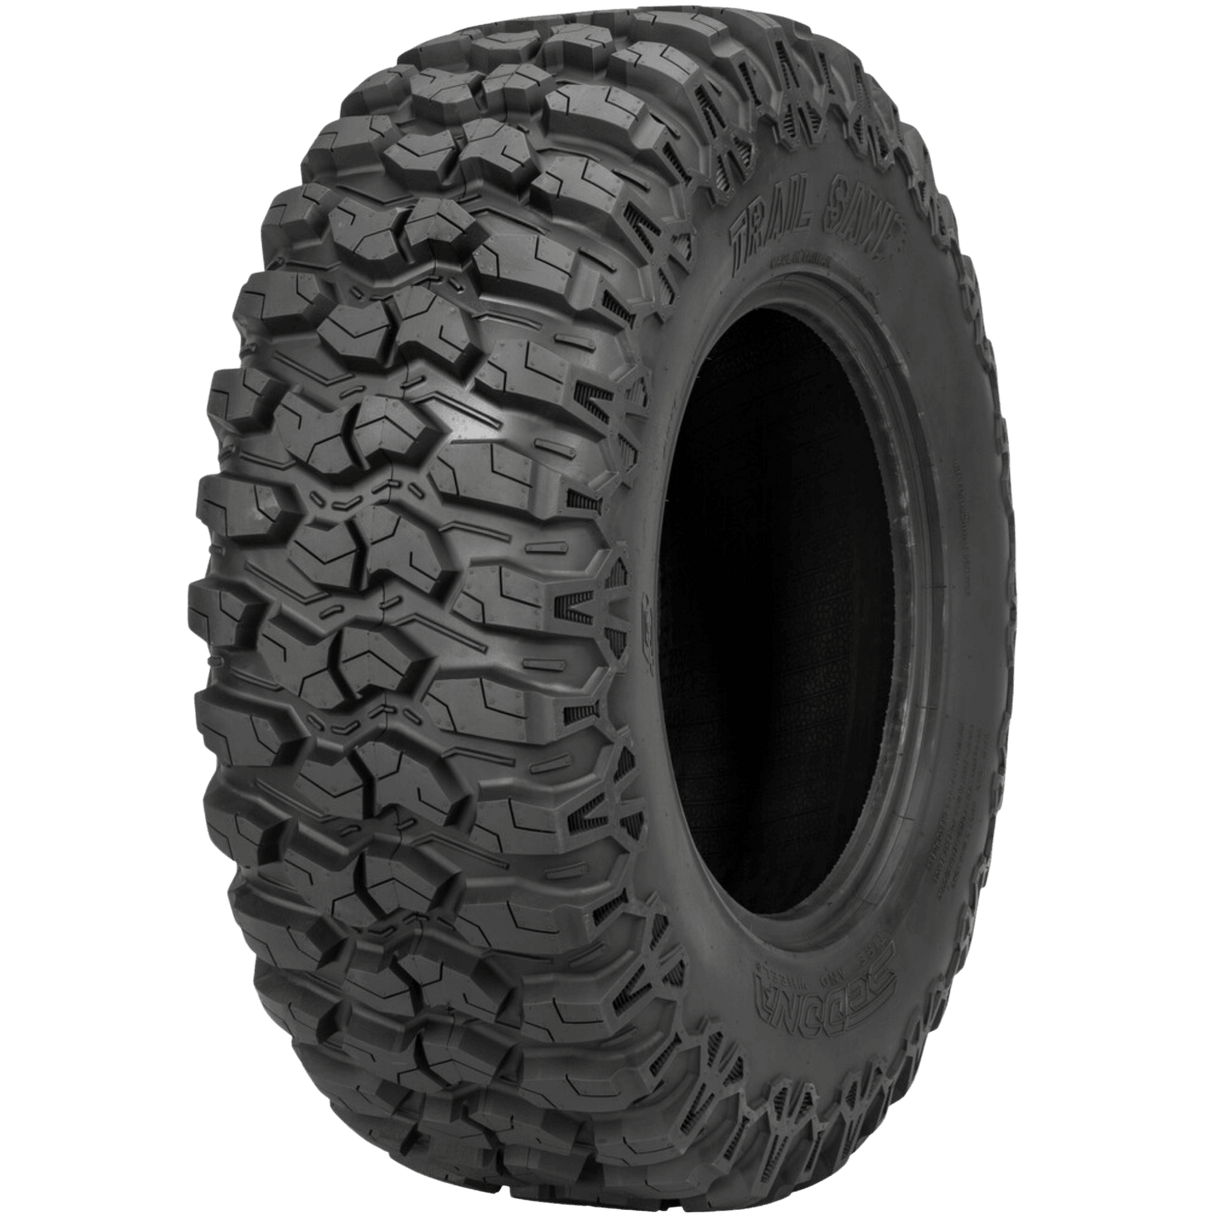 Trail Saw Tire - R1 Industries